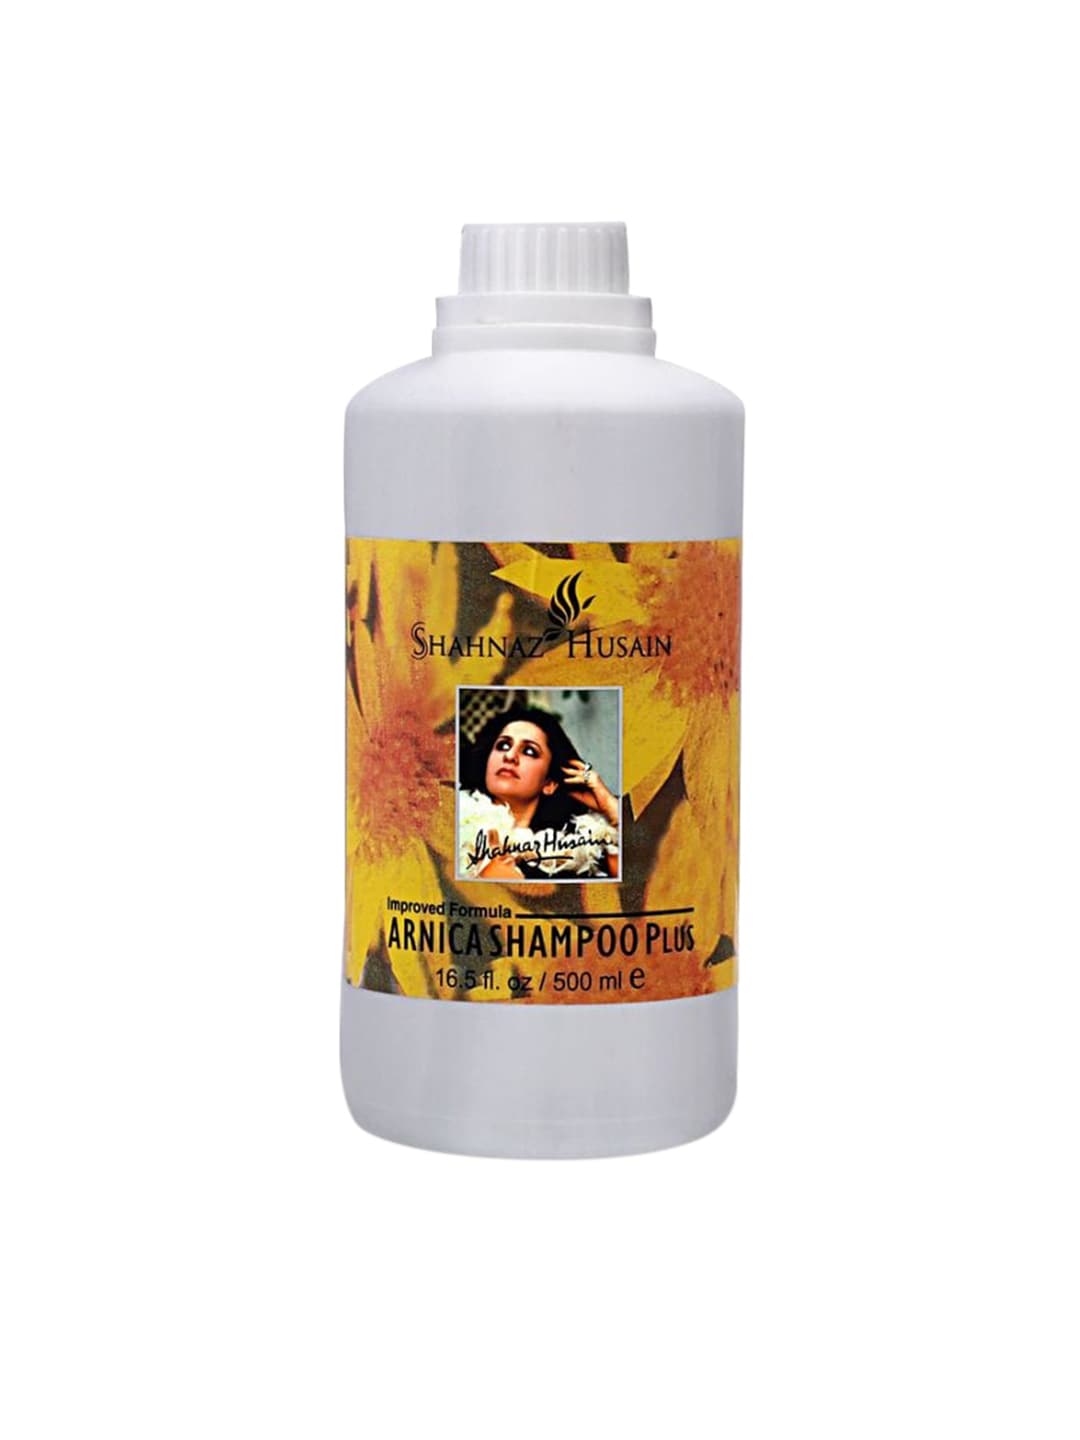 Shahnaz Husain White Shahnaz Husain Improved Formula Arnica Shampoo Plus 500 ml Price in India